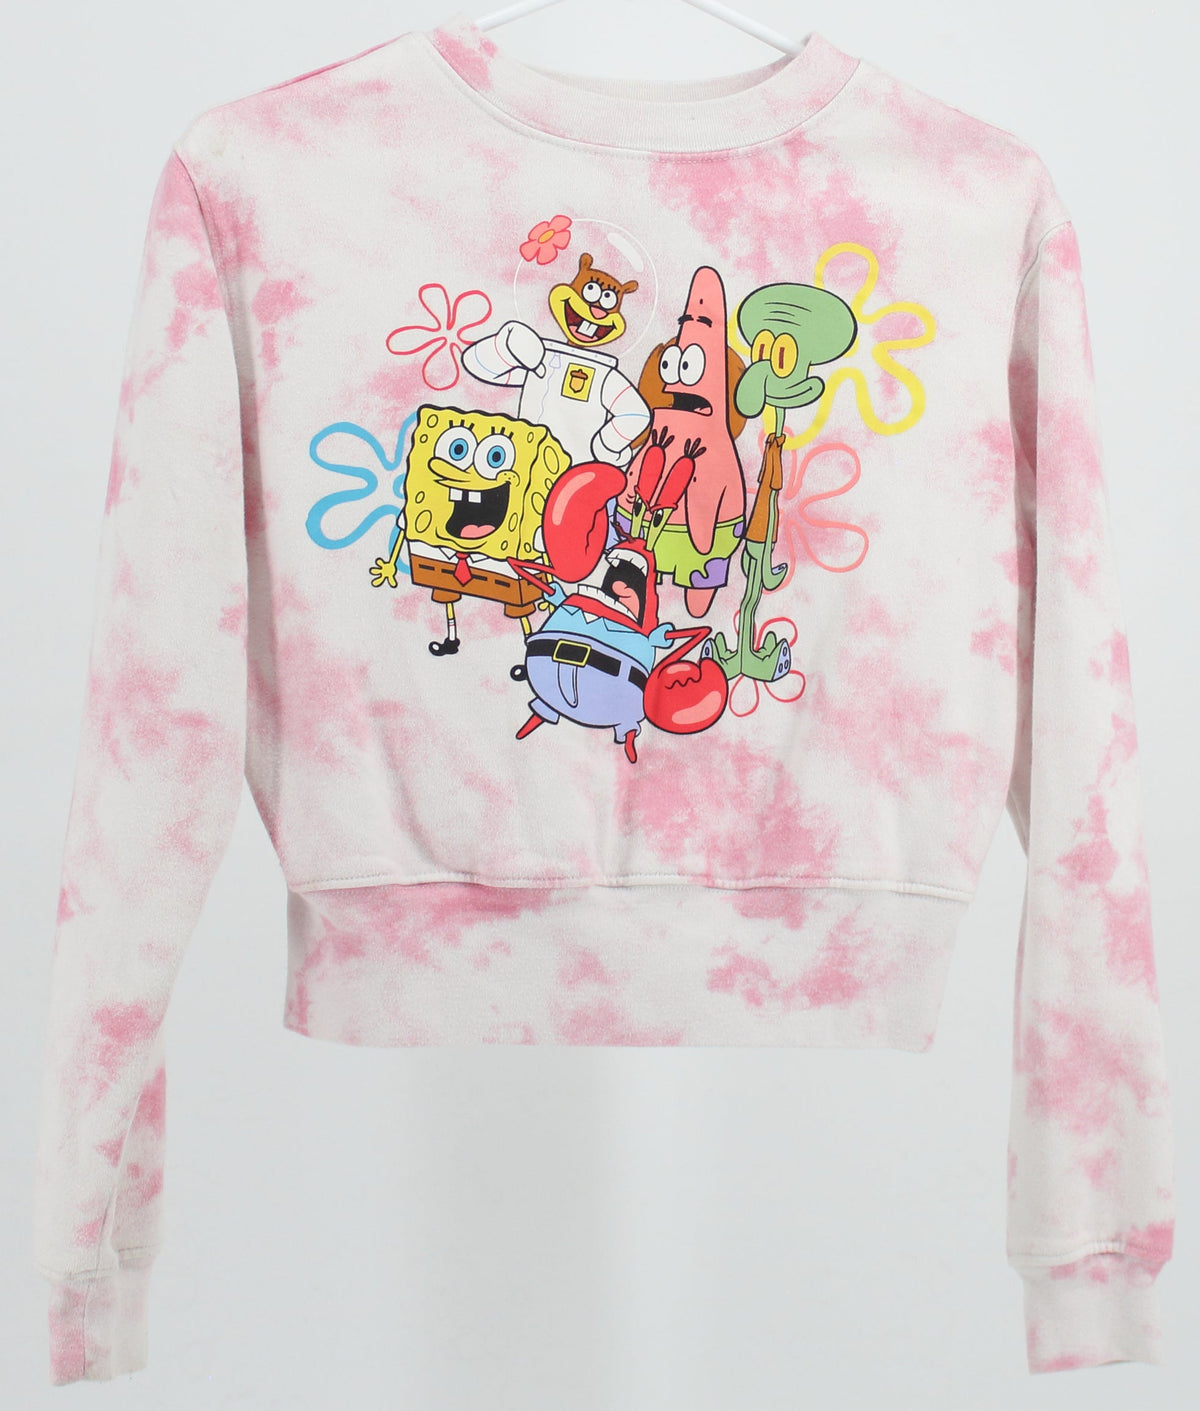 Nickelodeon Sponge Bob Squarepants Silk Printed White and Pink Tie Dye Sweatshirt